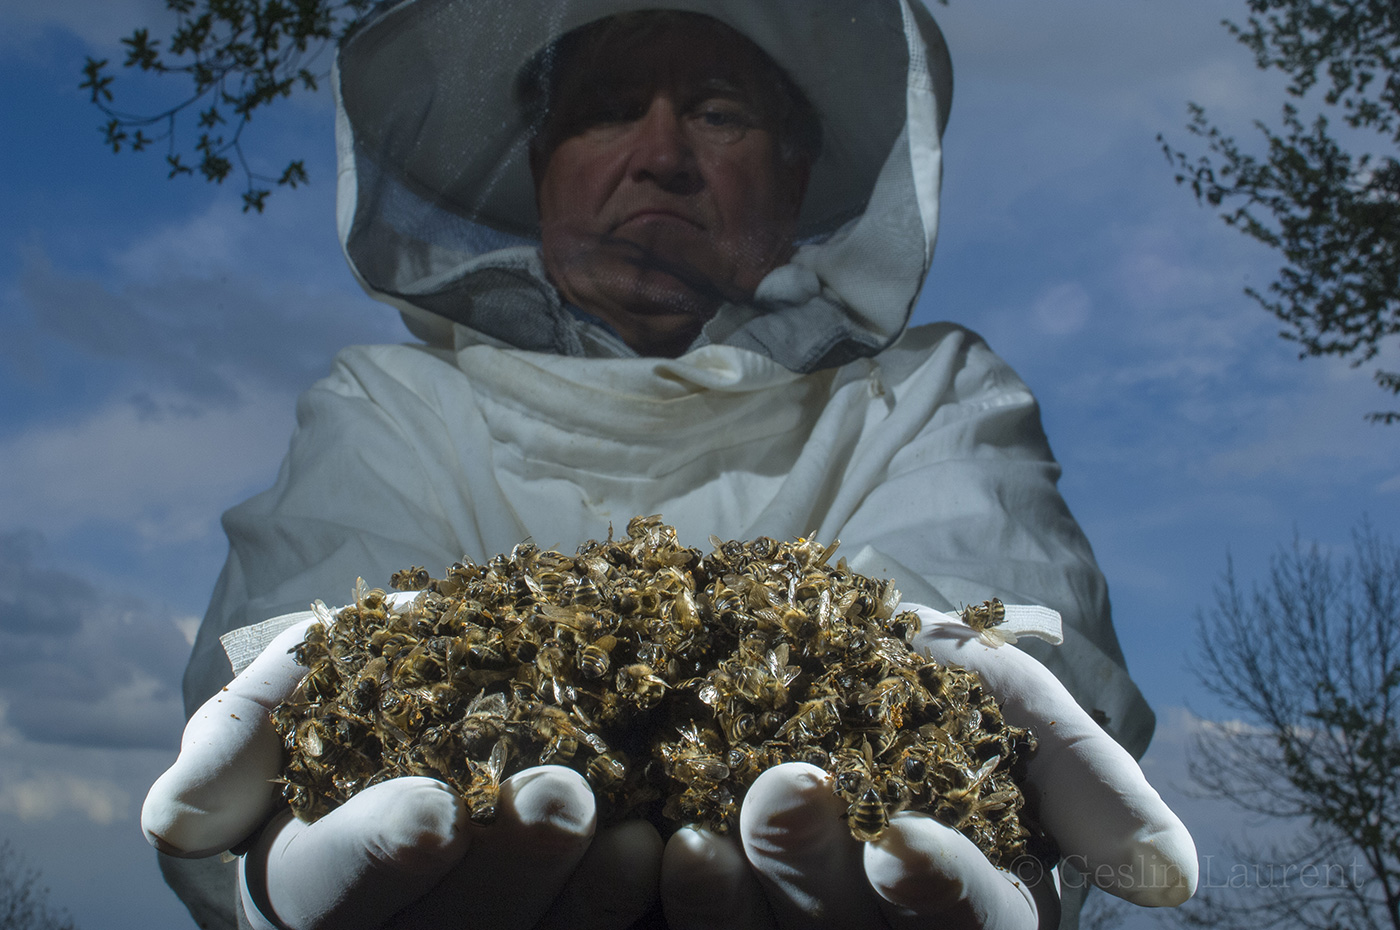 http://www.laurent-geslin.com/wp-content/uploads/2014/03/Bees-Colony-collapse-disorder_Laurent-Geslin_01.jpg